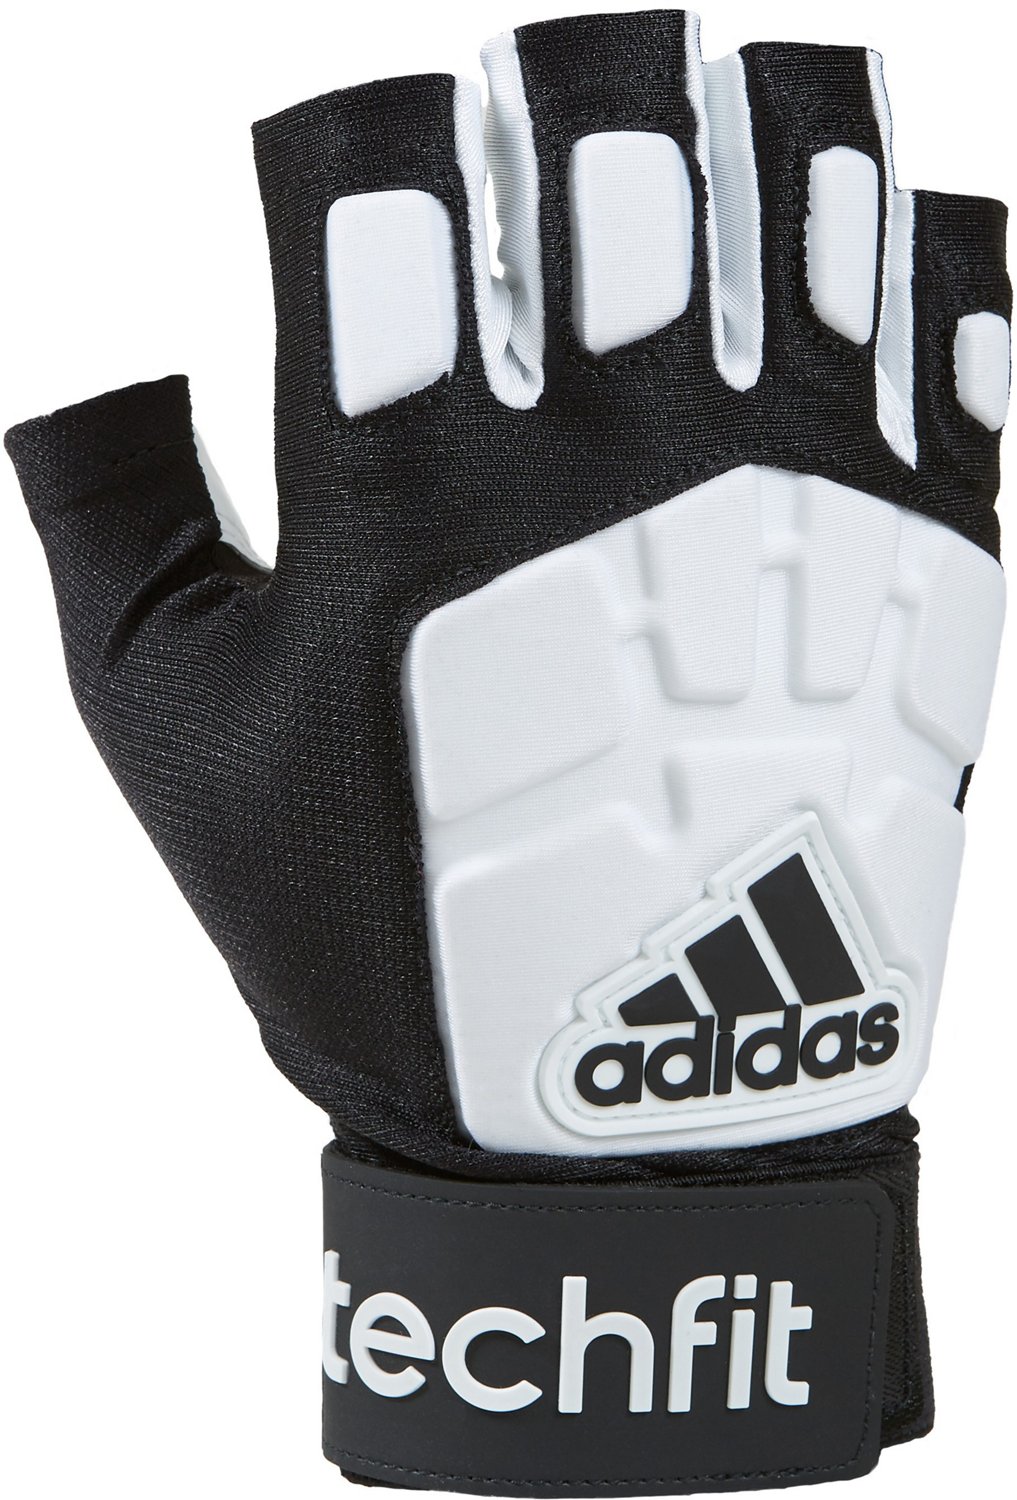 adidas youth techfit lineman football gloves